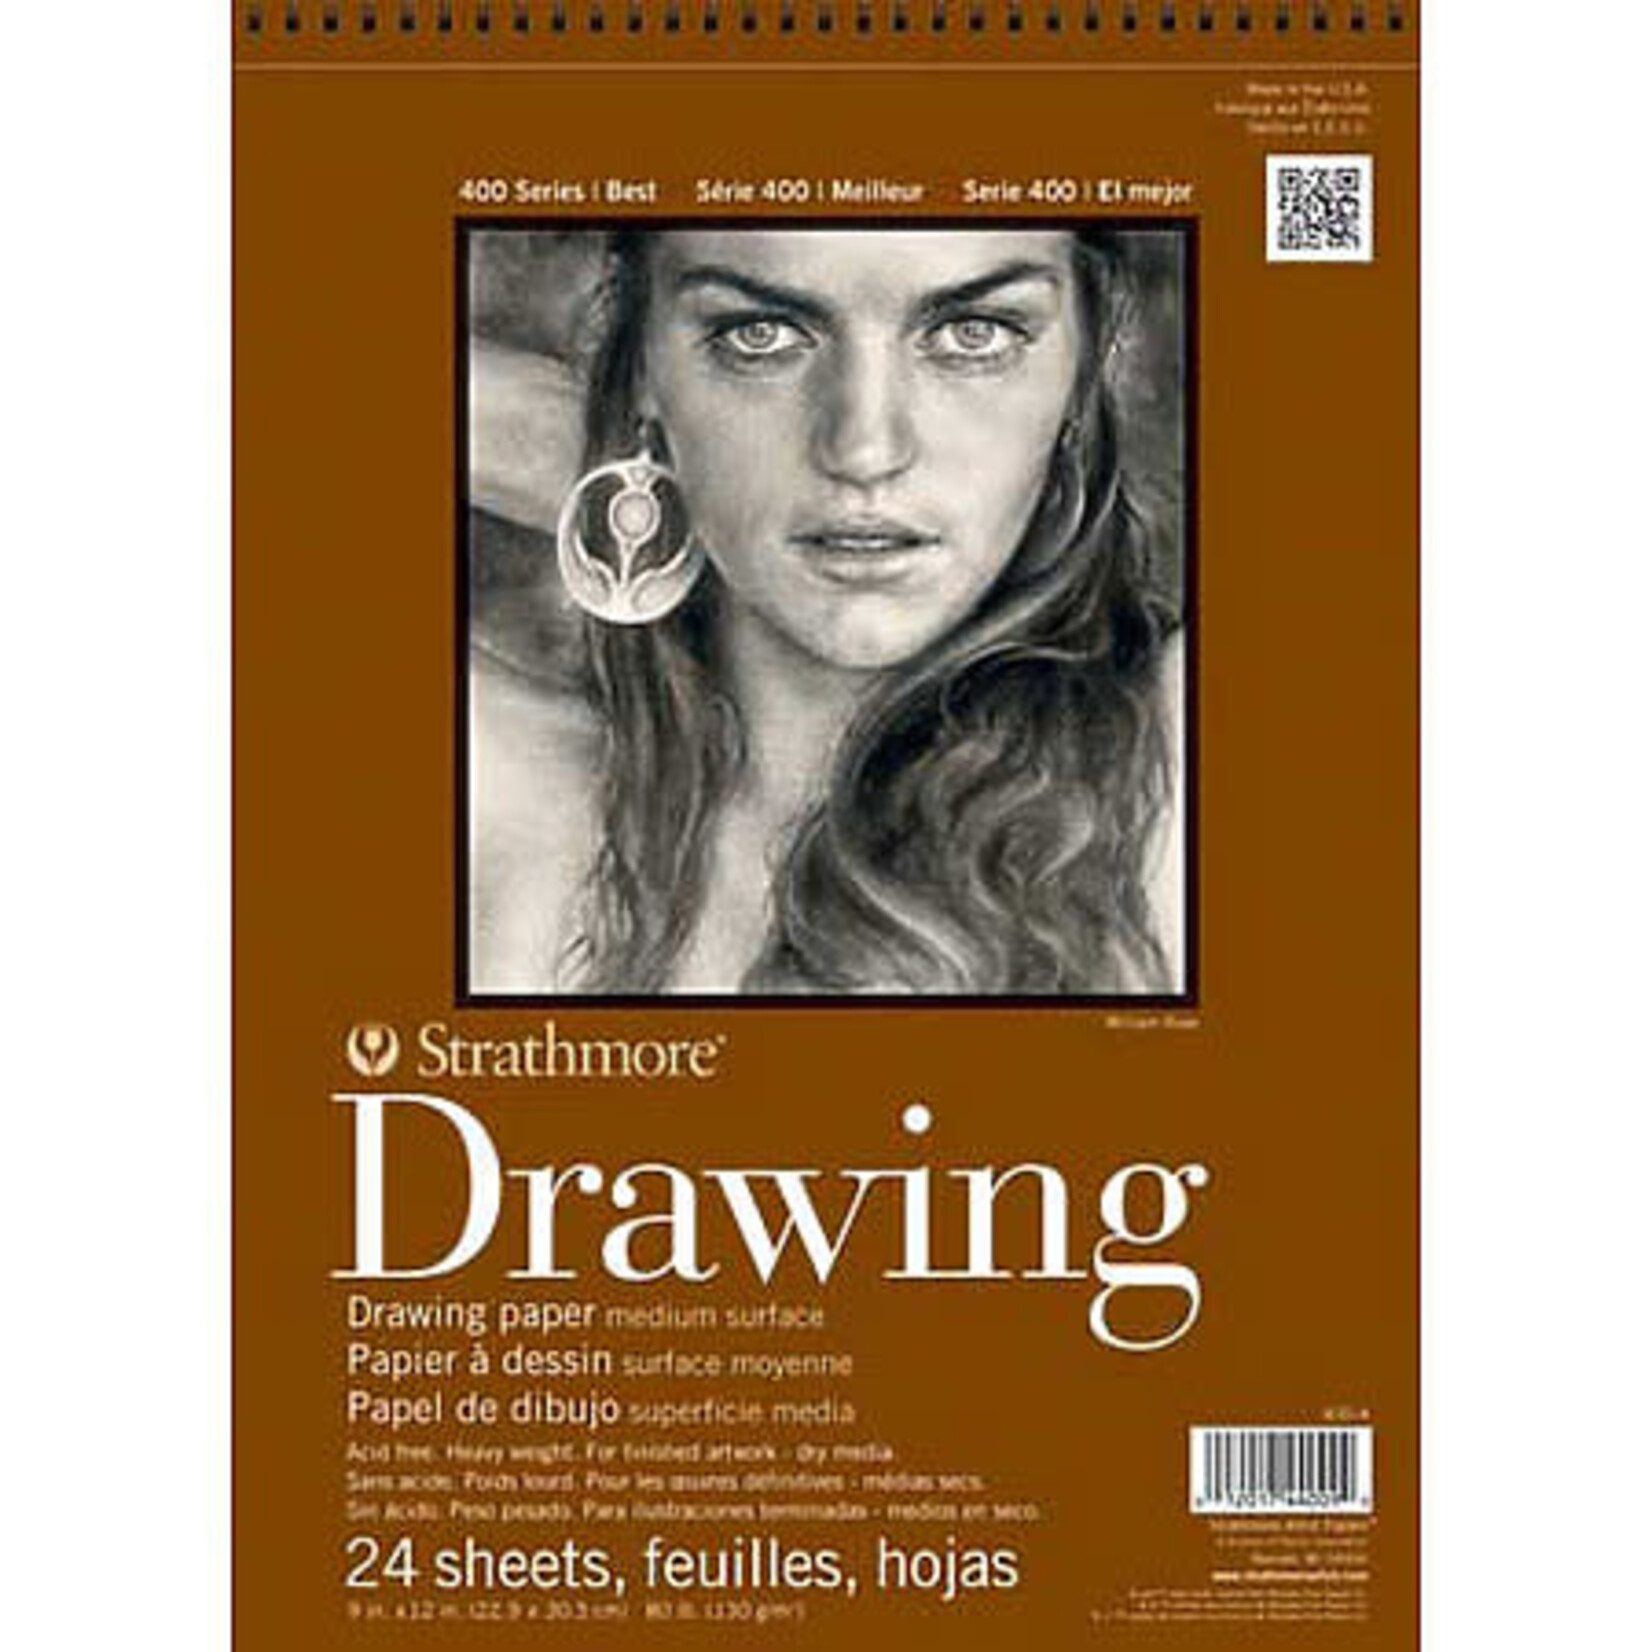 Strathmore Drawing Pads 400 Series, Medium Surface, 18 X 24